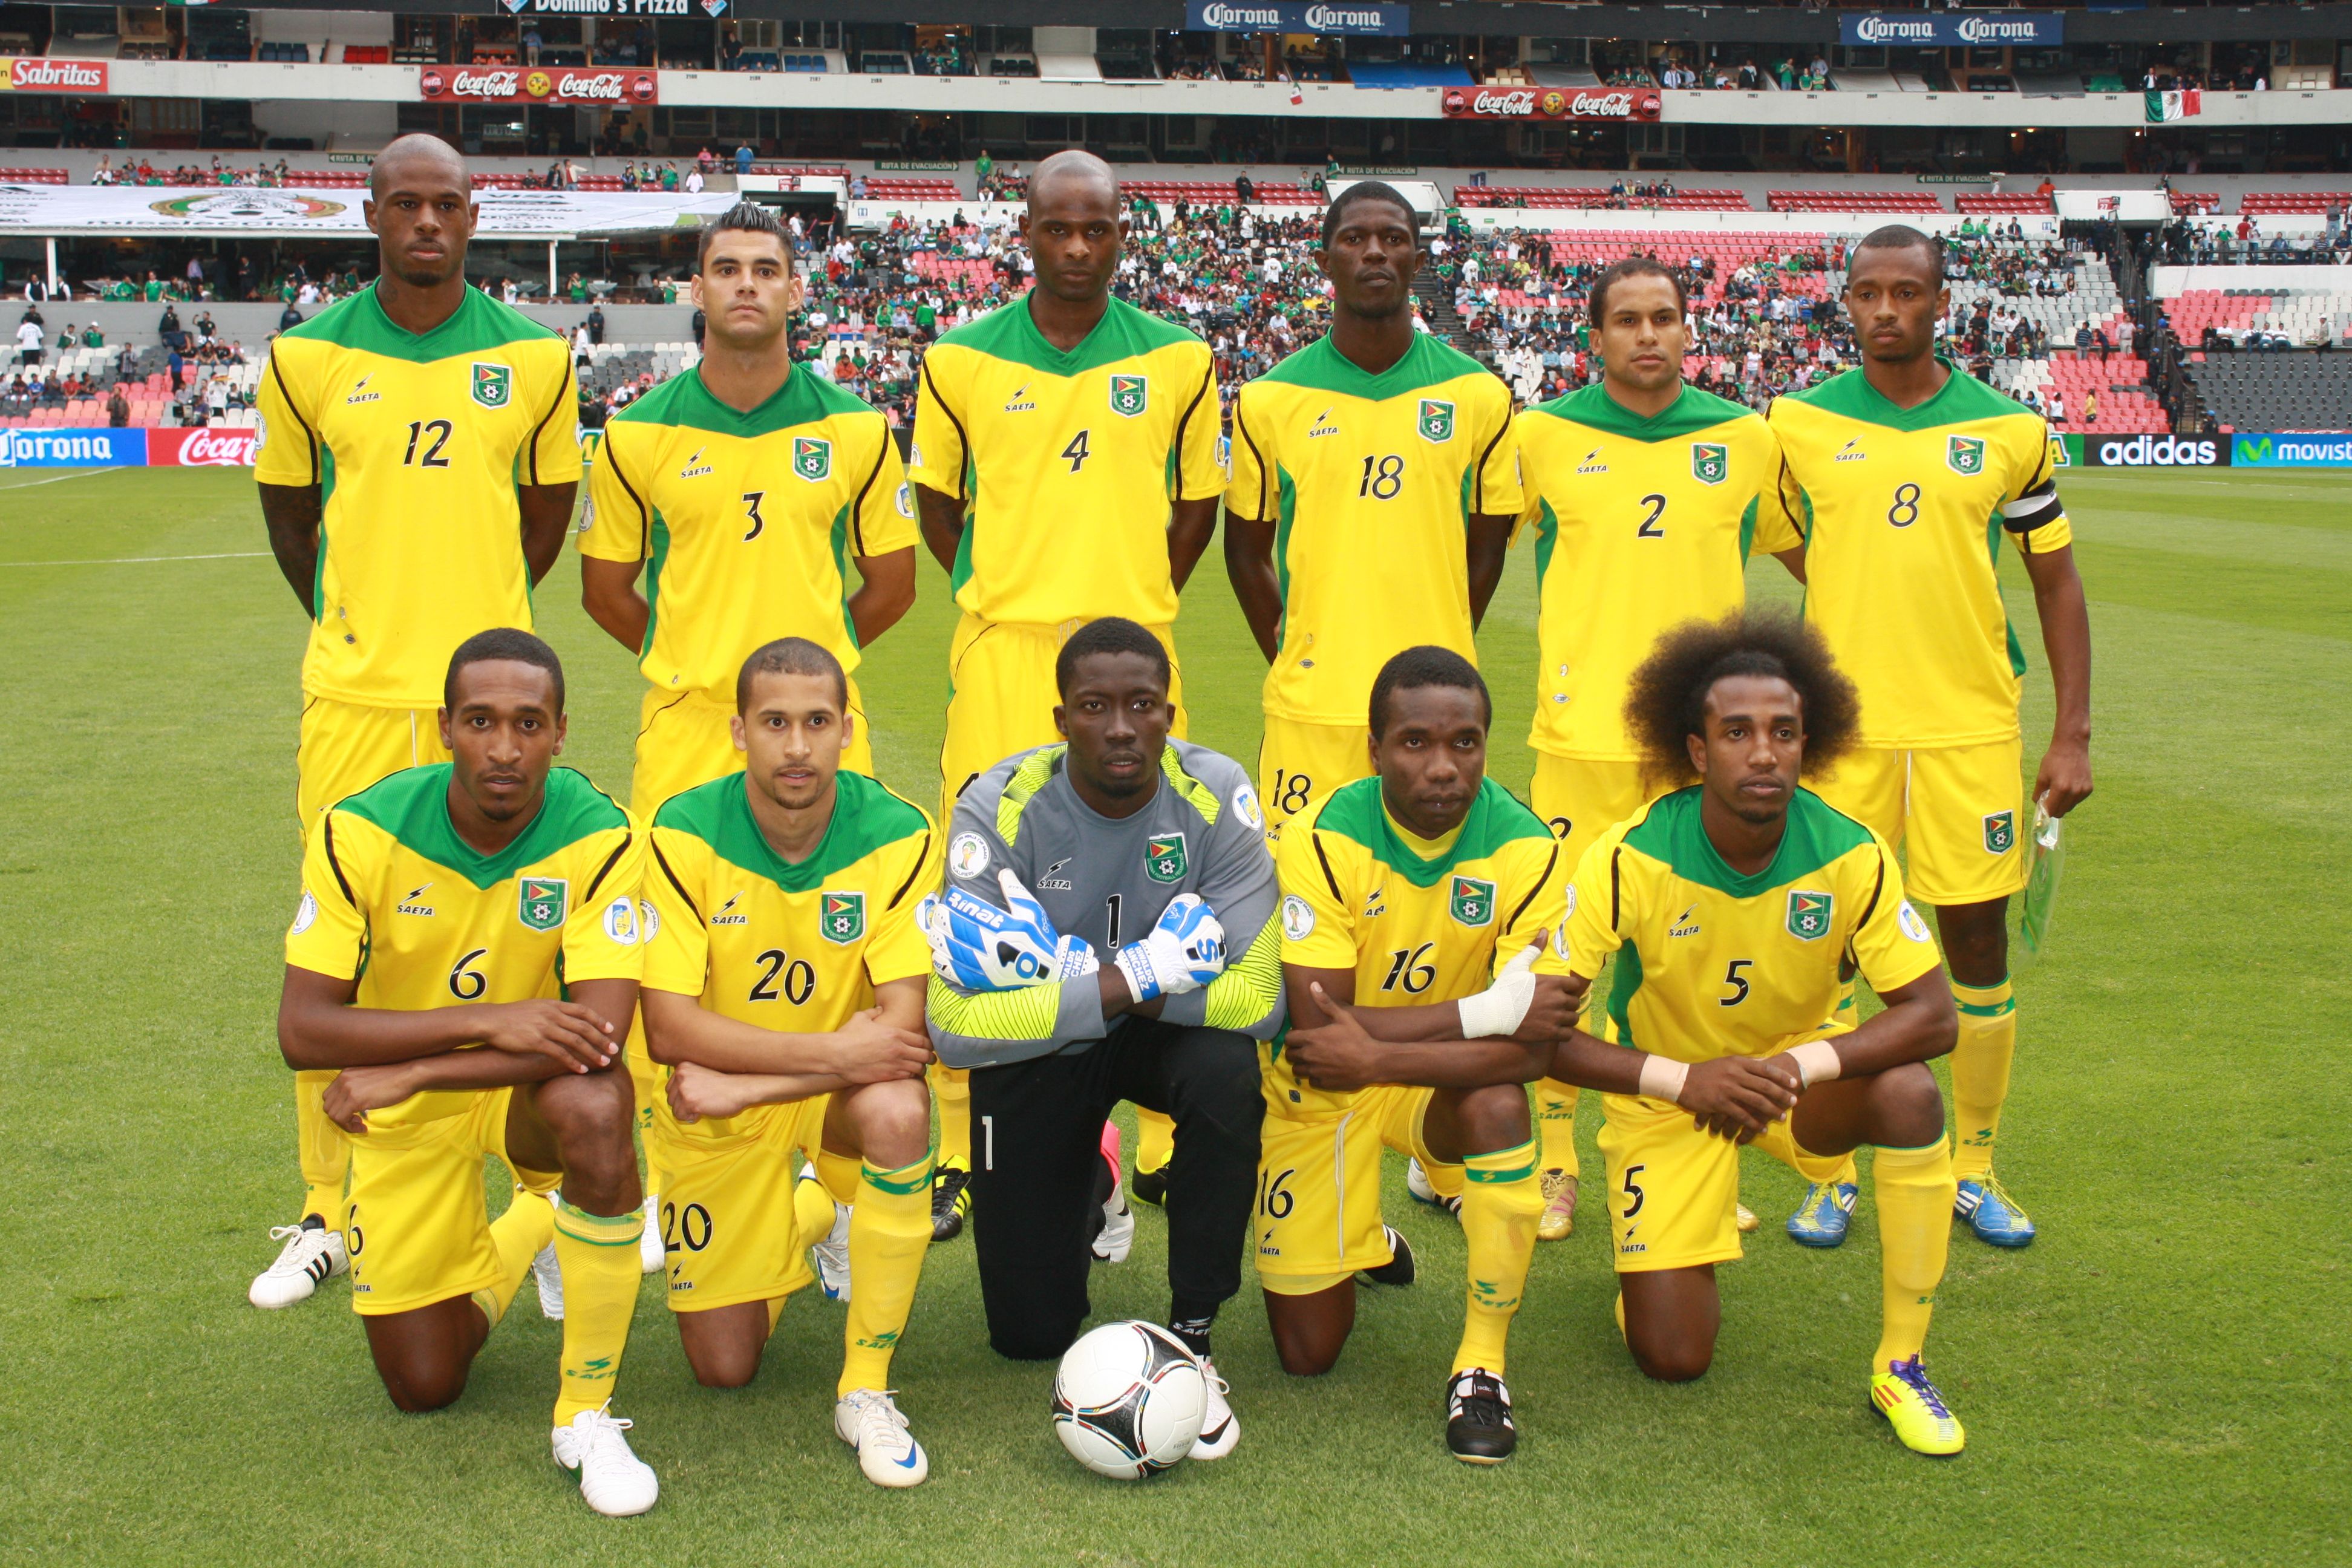 Guyana Football Team Copyright: © writeopinions.com